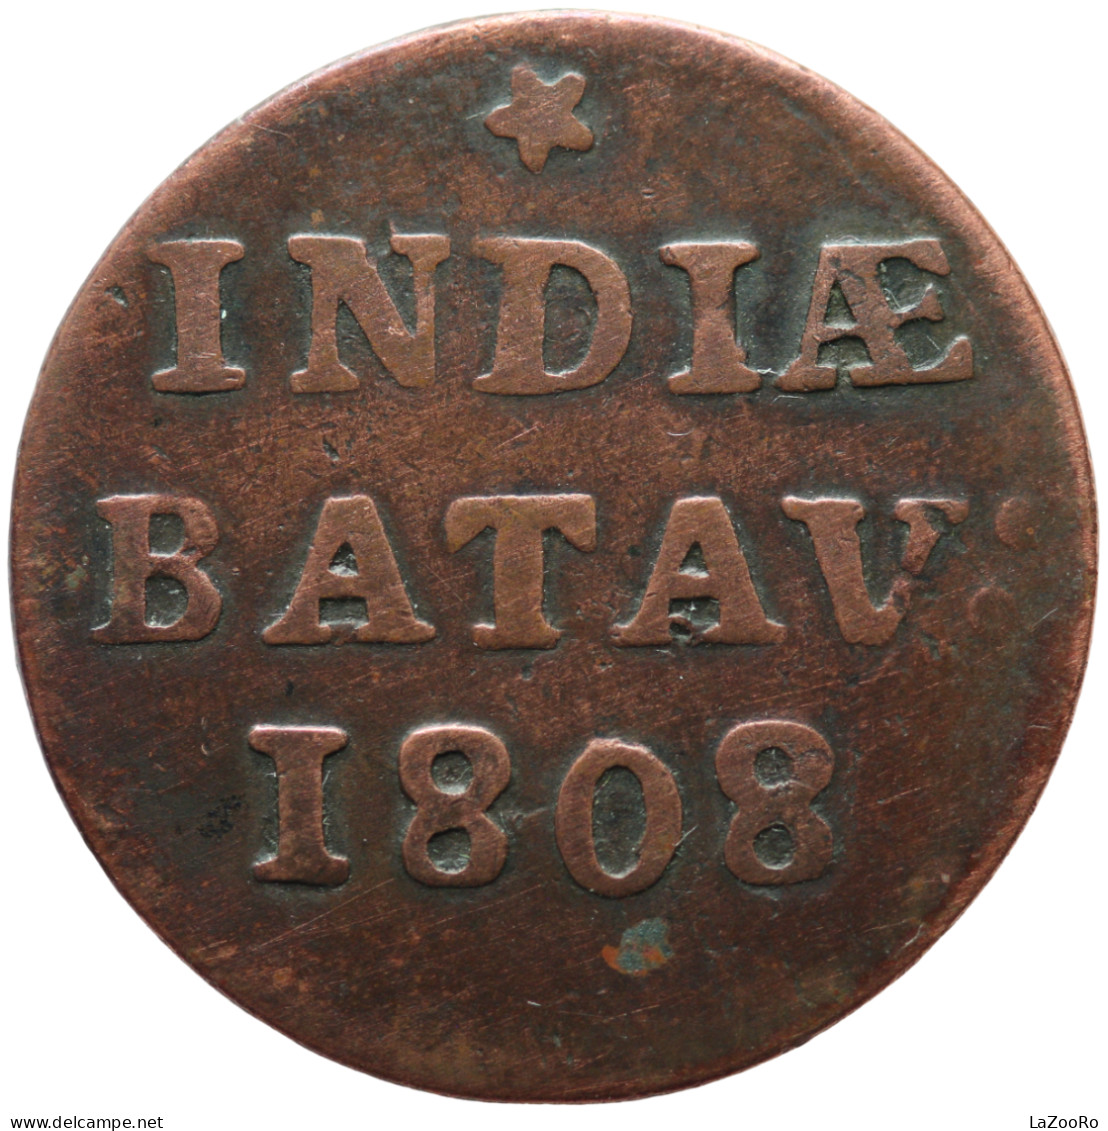 LaZooRo: Dutch East Indies Batavian Republic 1 Duit 1808 - Dutch East Indies